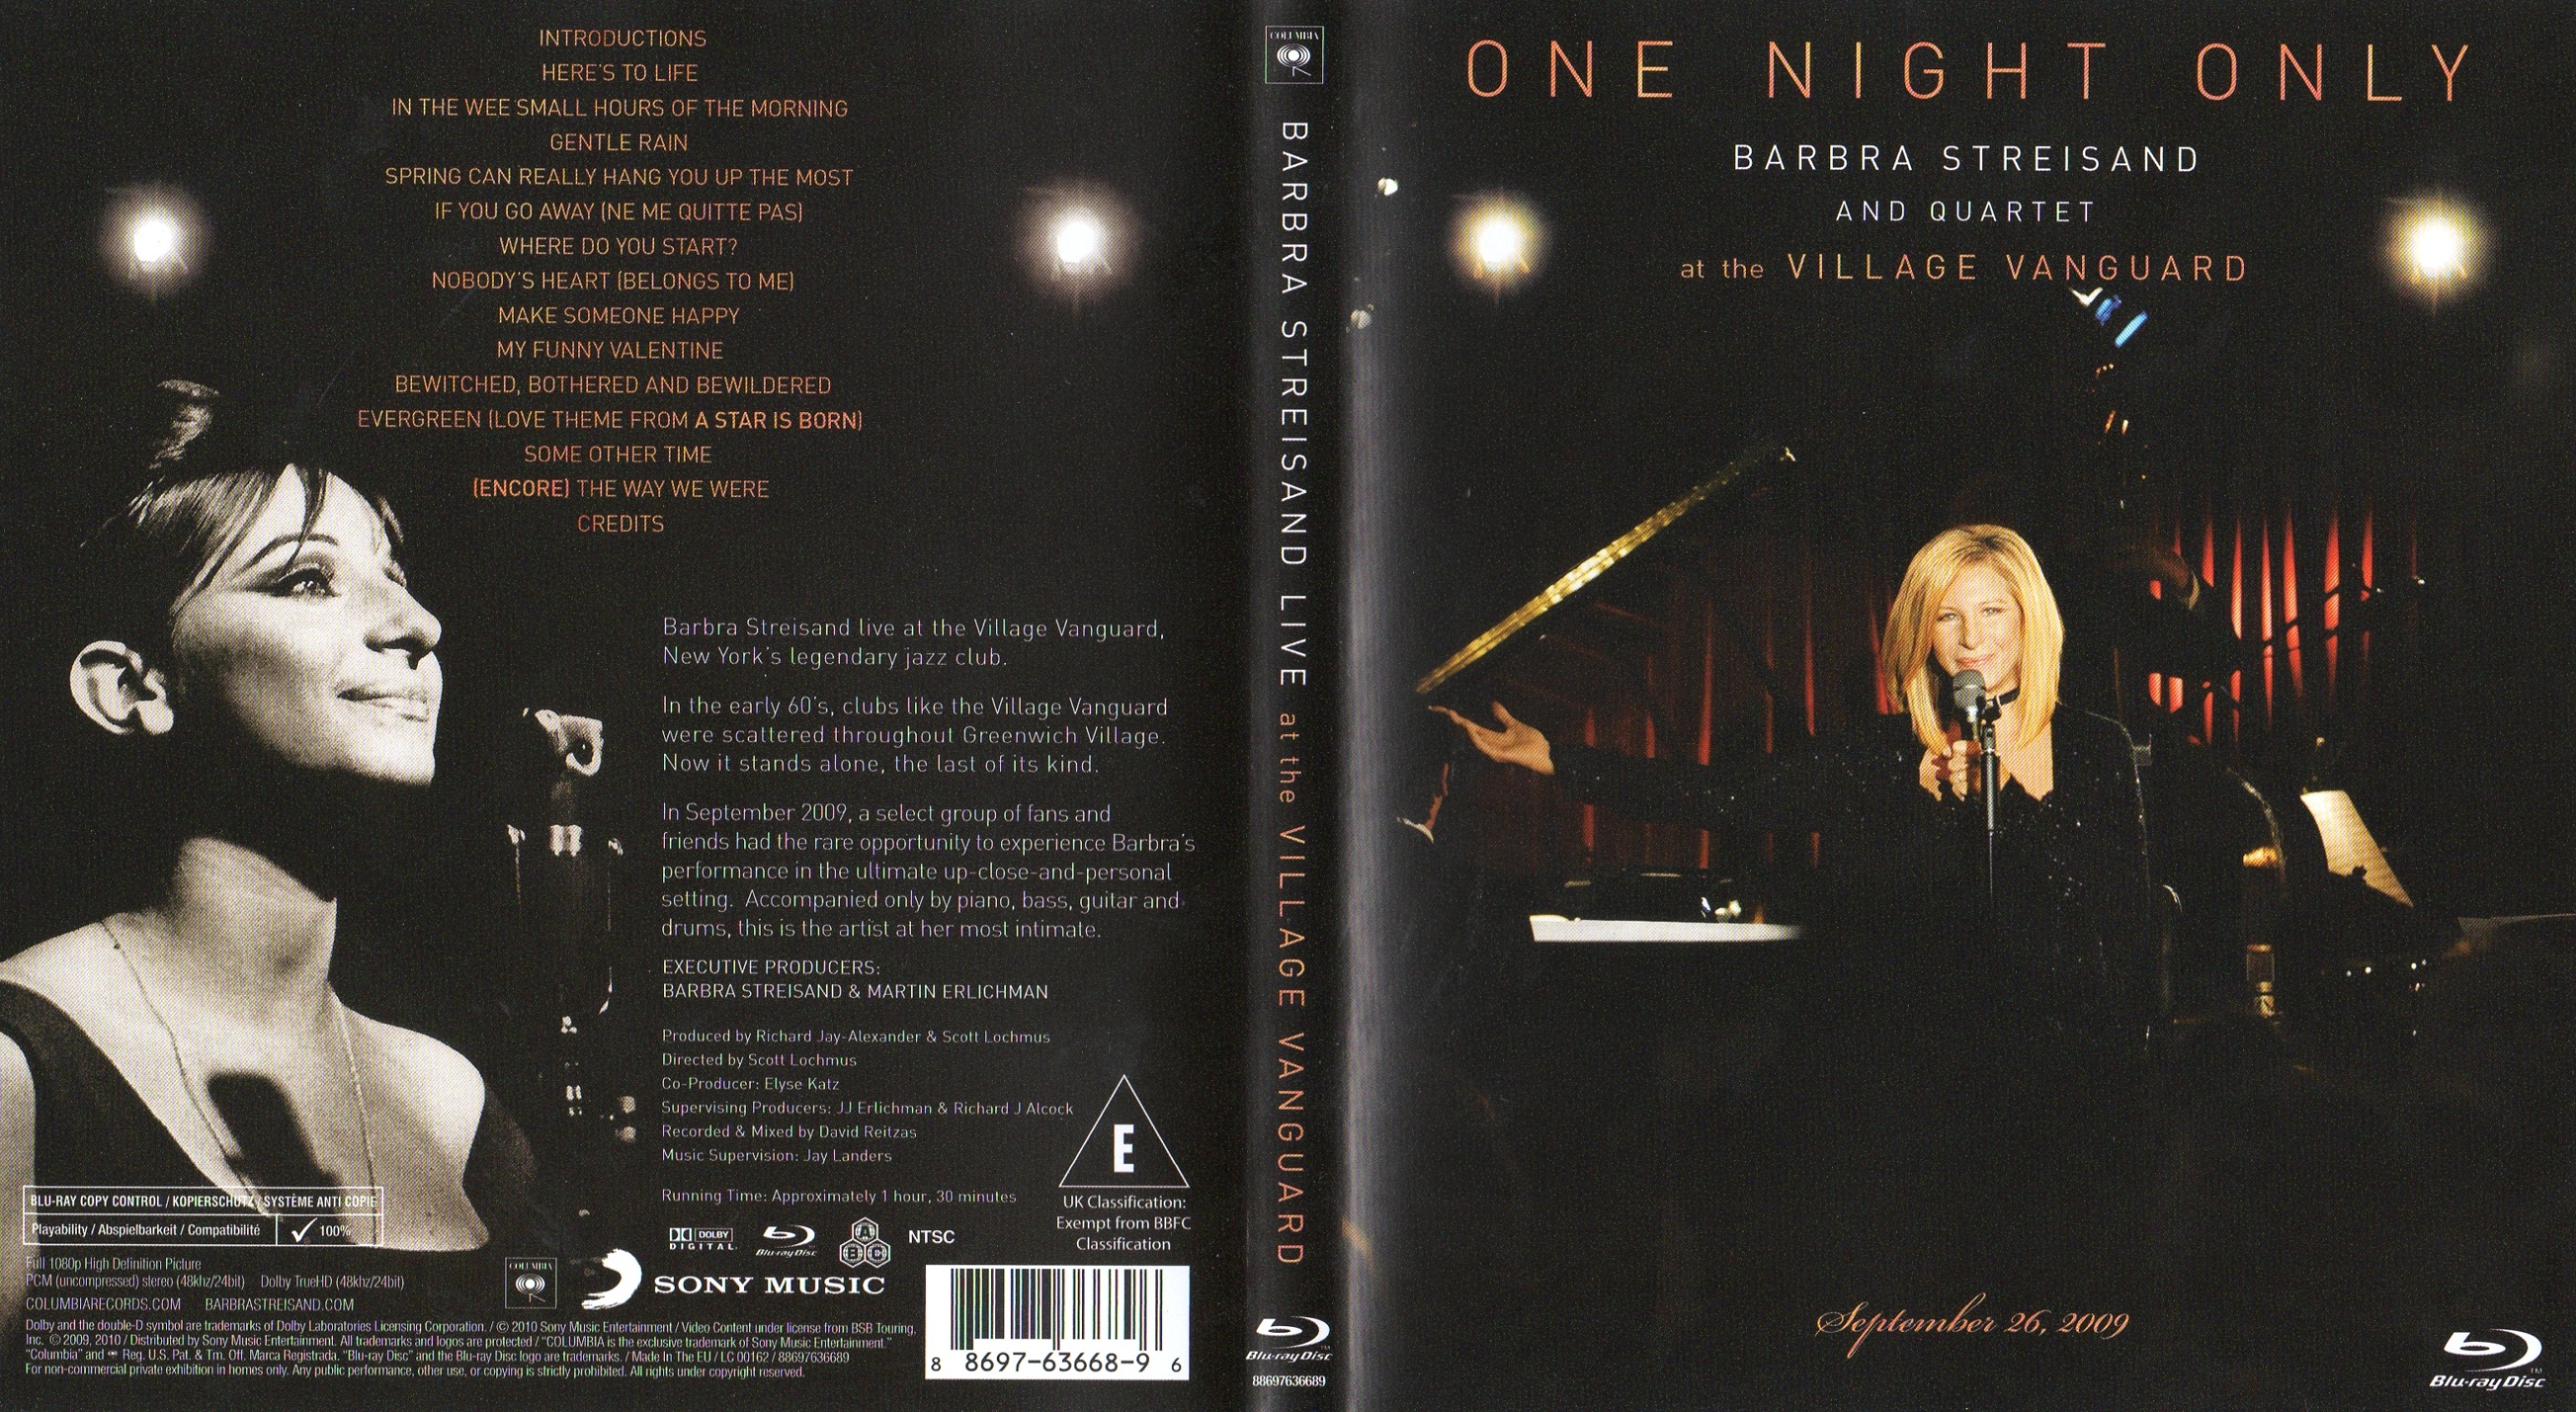 Jaquette DVD Barbra Streisand One Night Only Zone 1 (BLU-RAY)